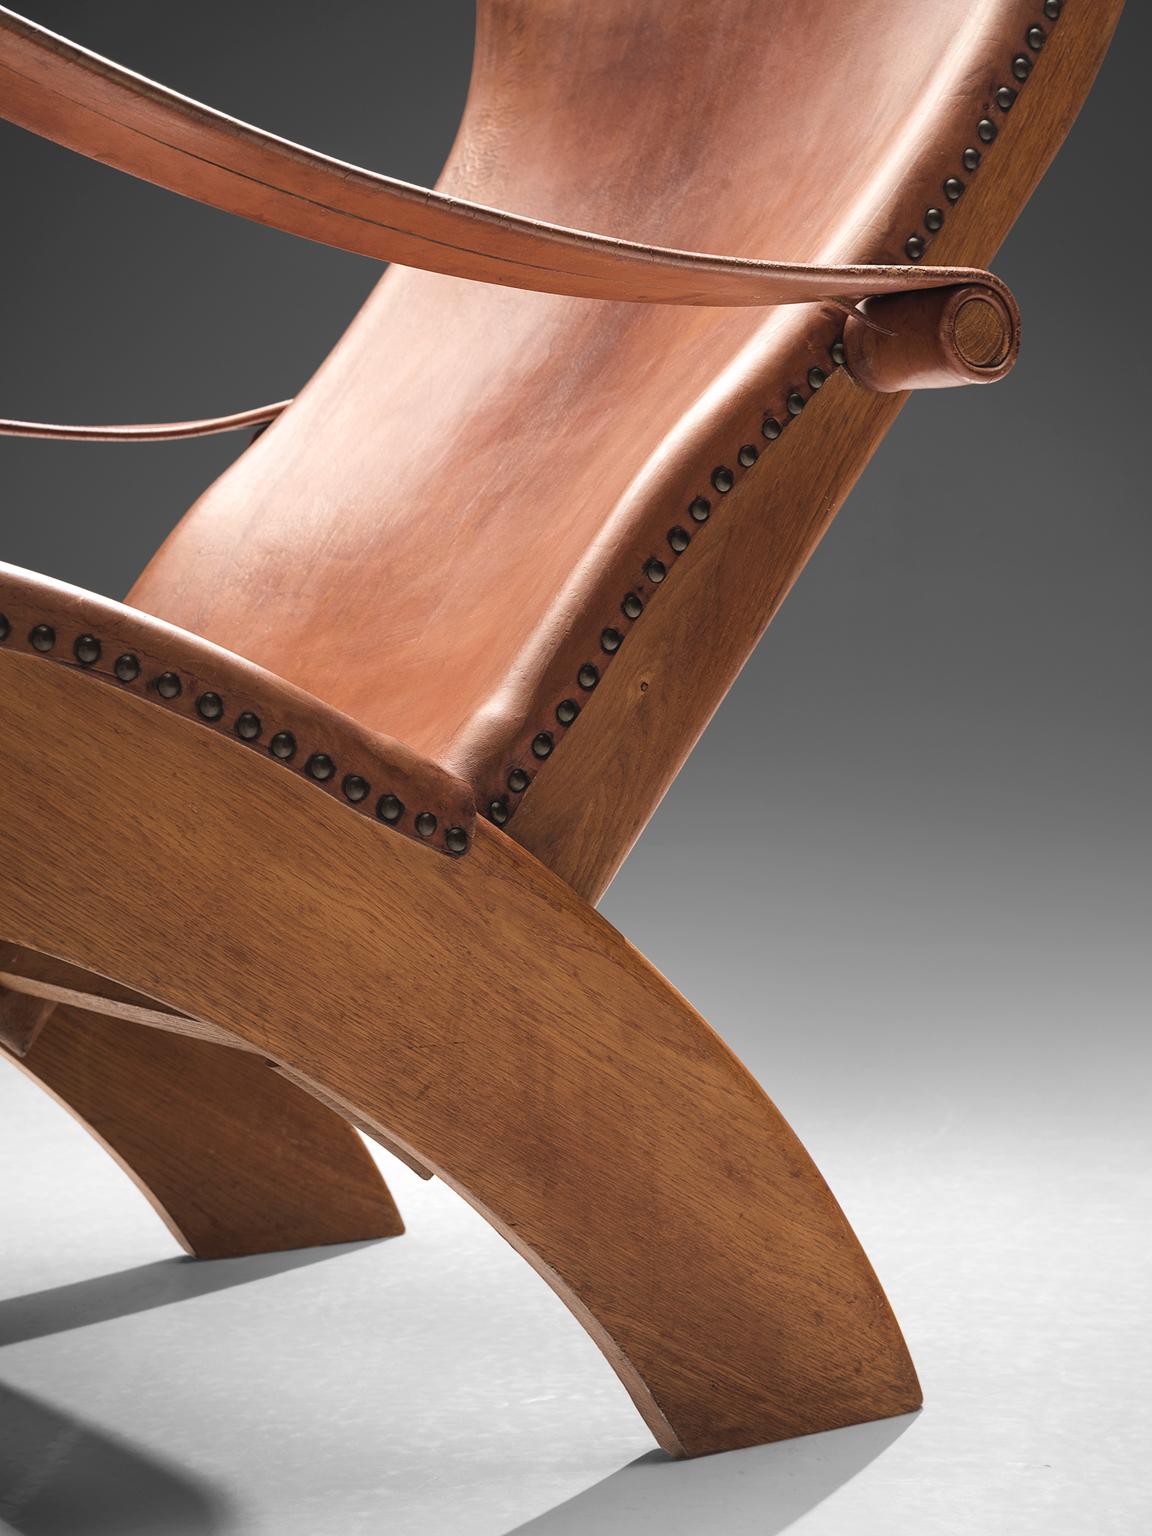 Leather Mogens Voltelen for Niels Vodder Original Patinated 'Copenhagen Chair'